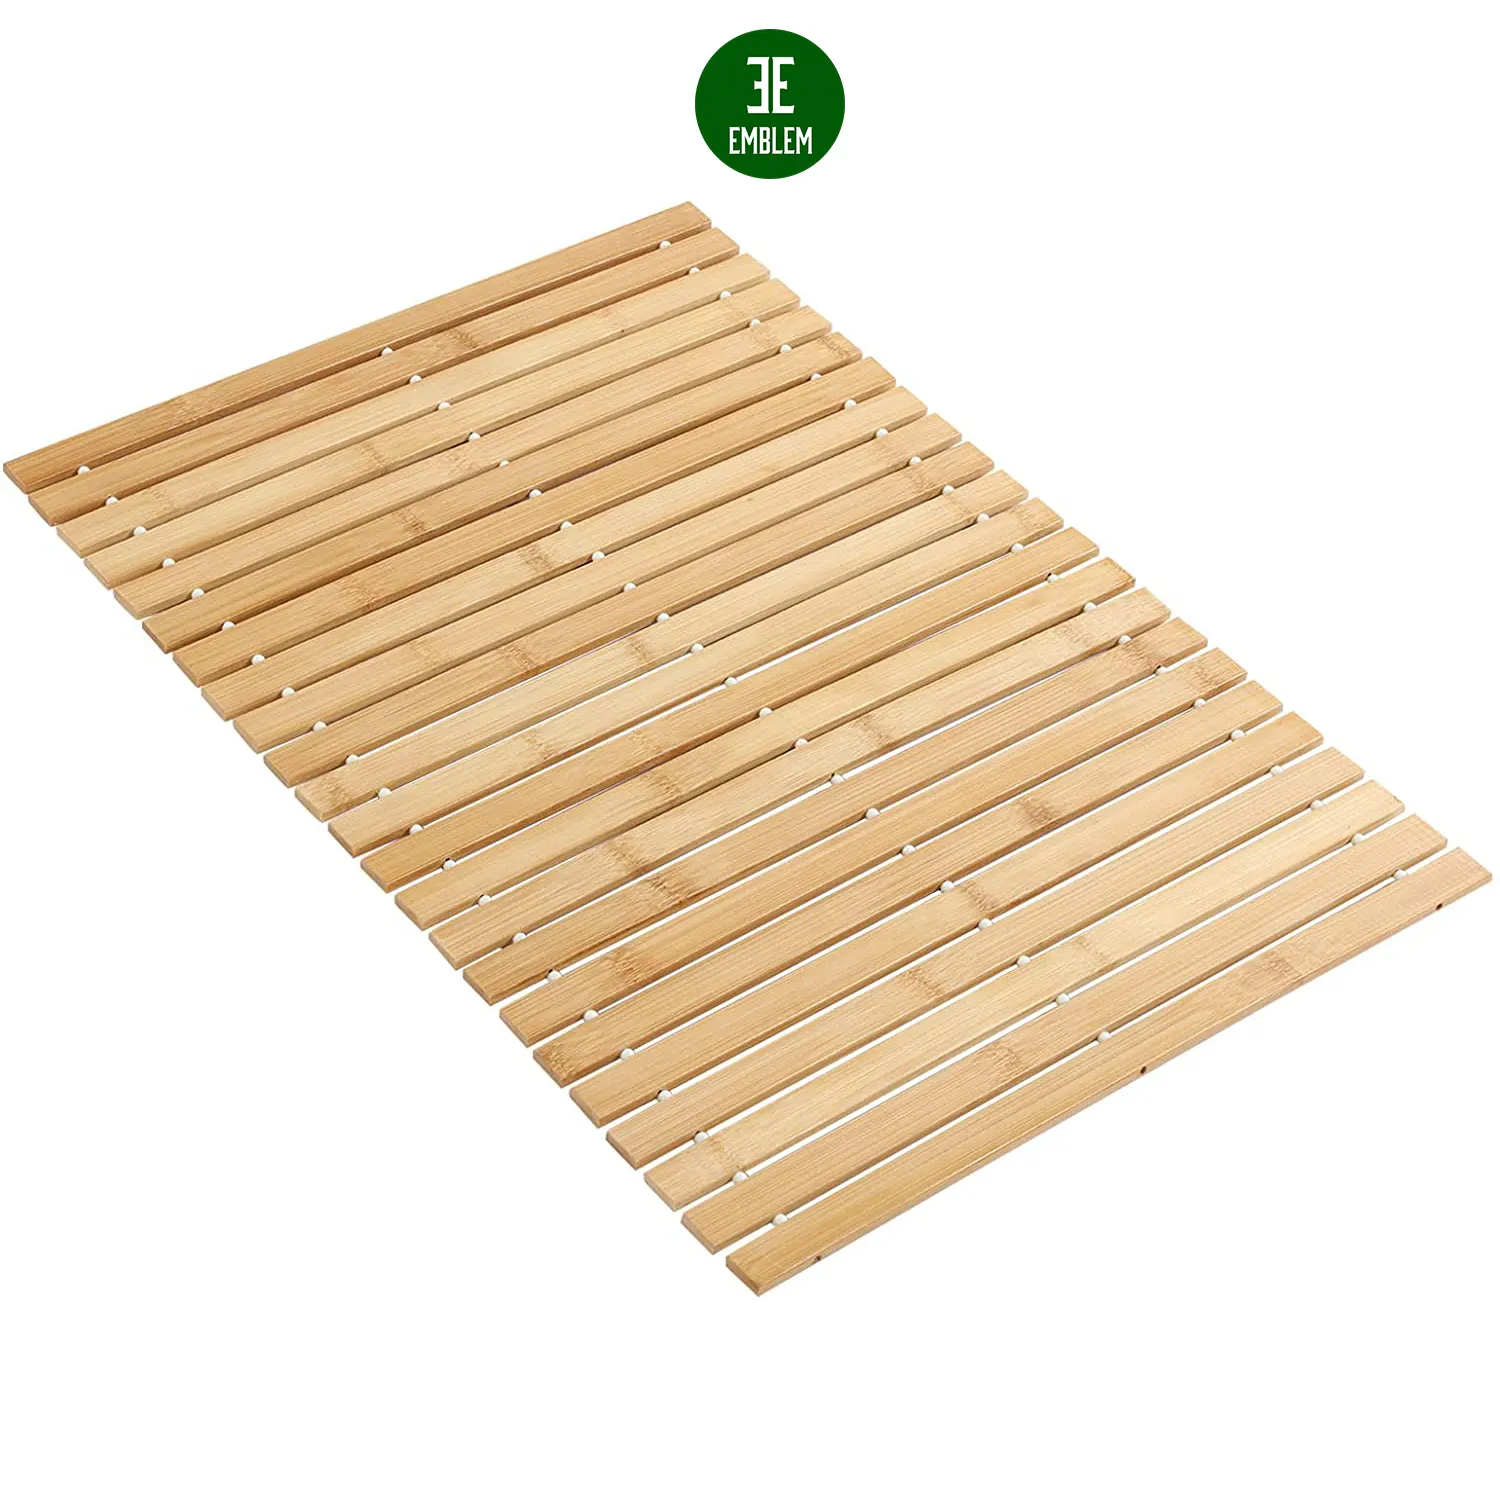 Bamboo Bath Mat for Bathroom, Bathroom Rugs Non-Slip for Indoor or Outdoor Wood Shower Mat